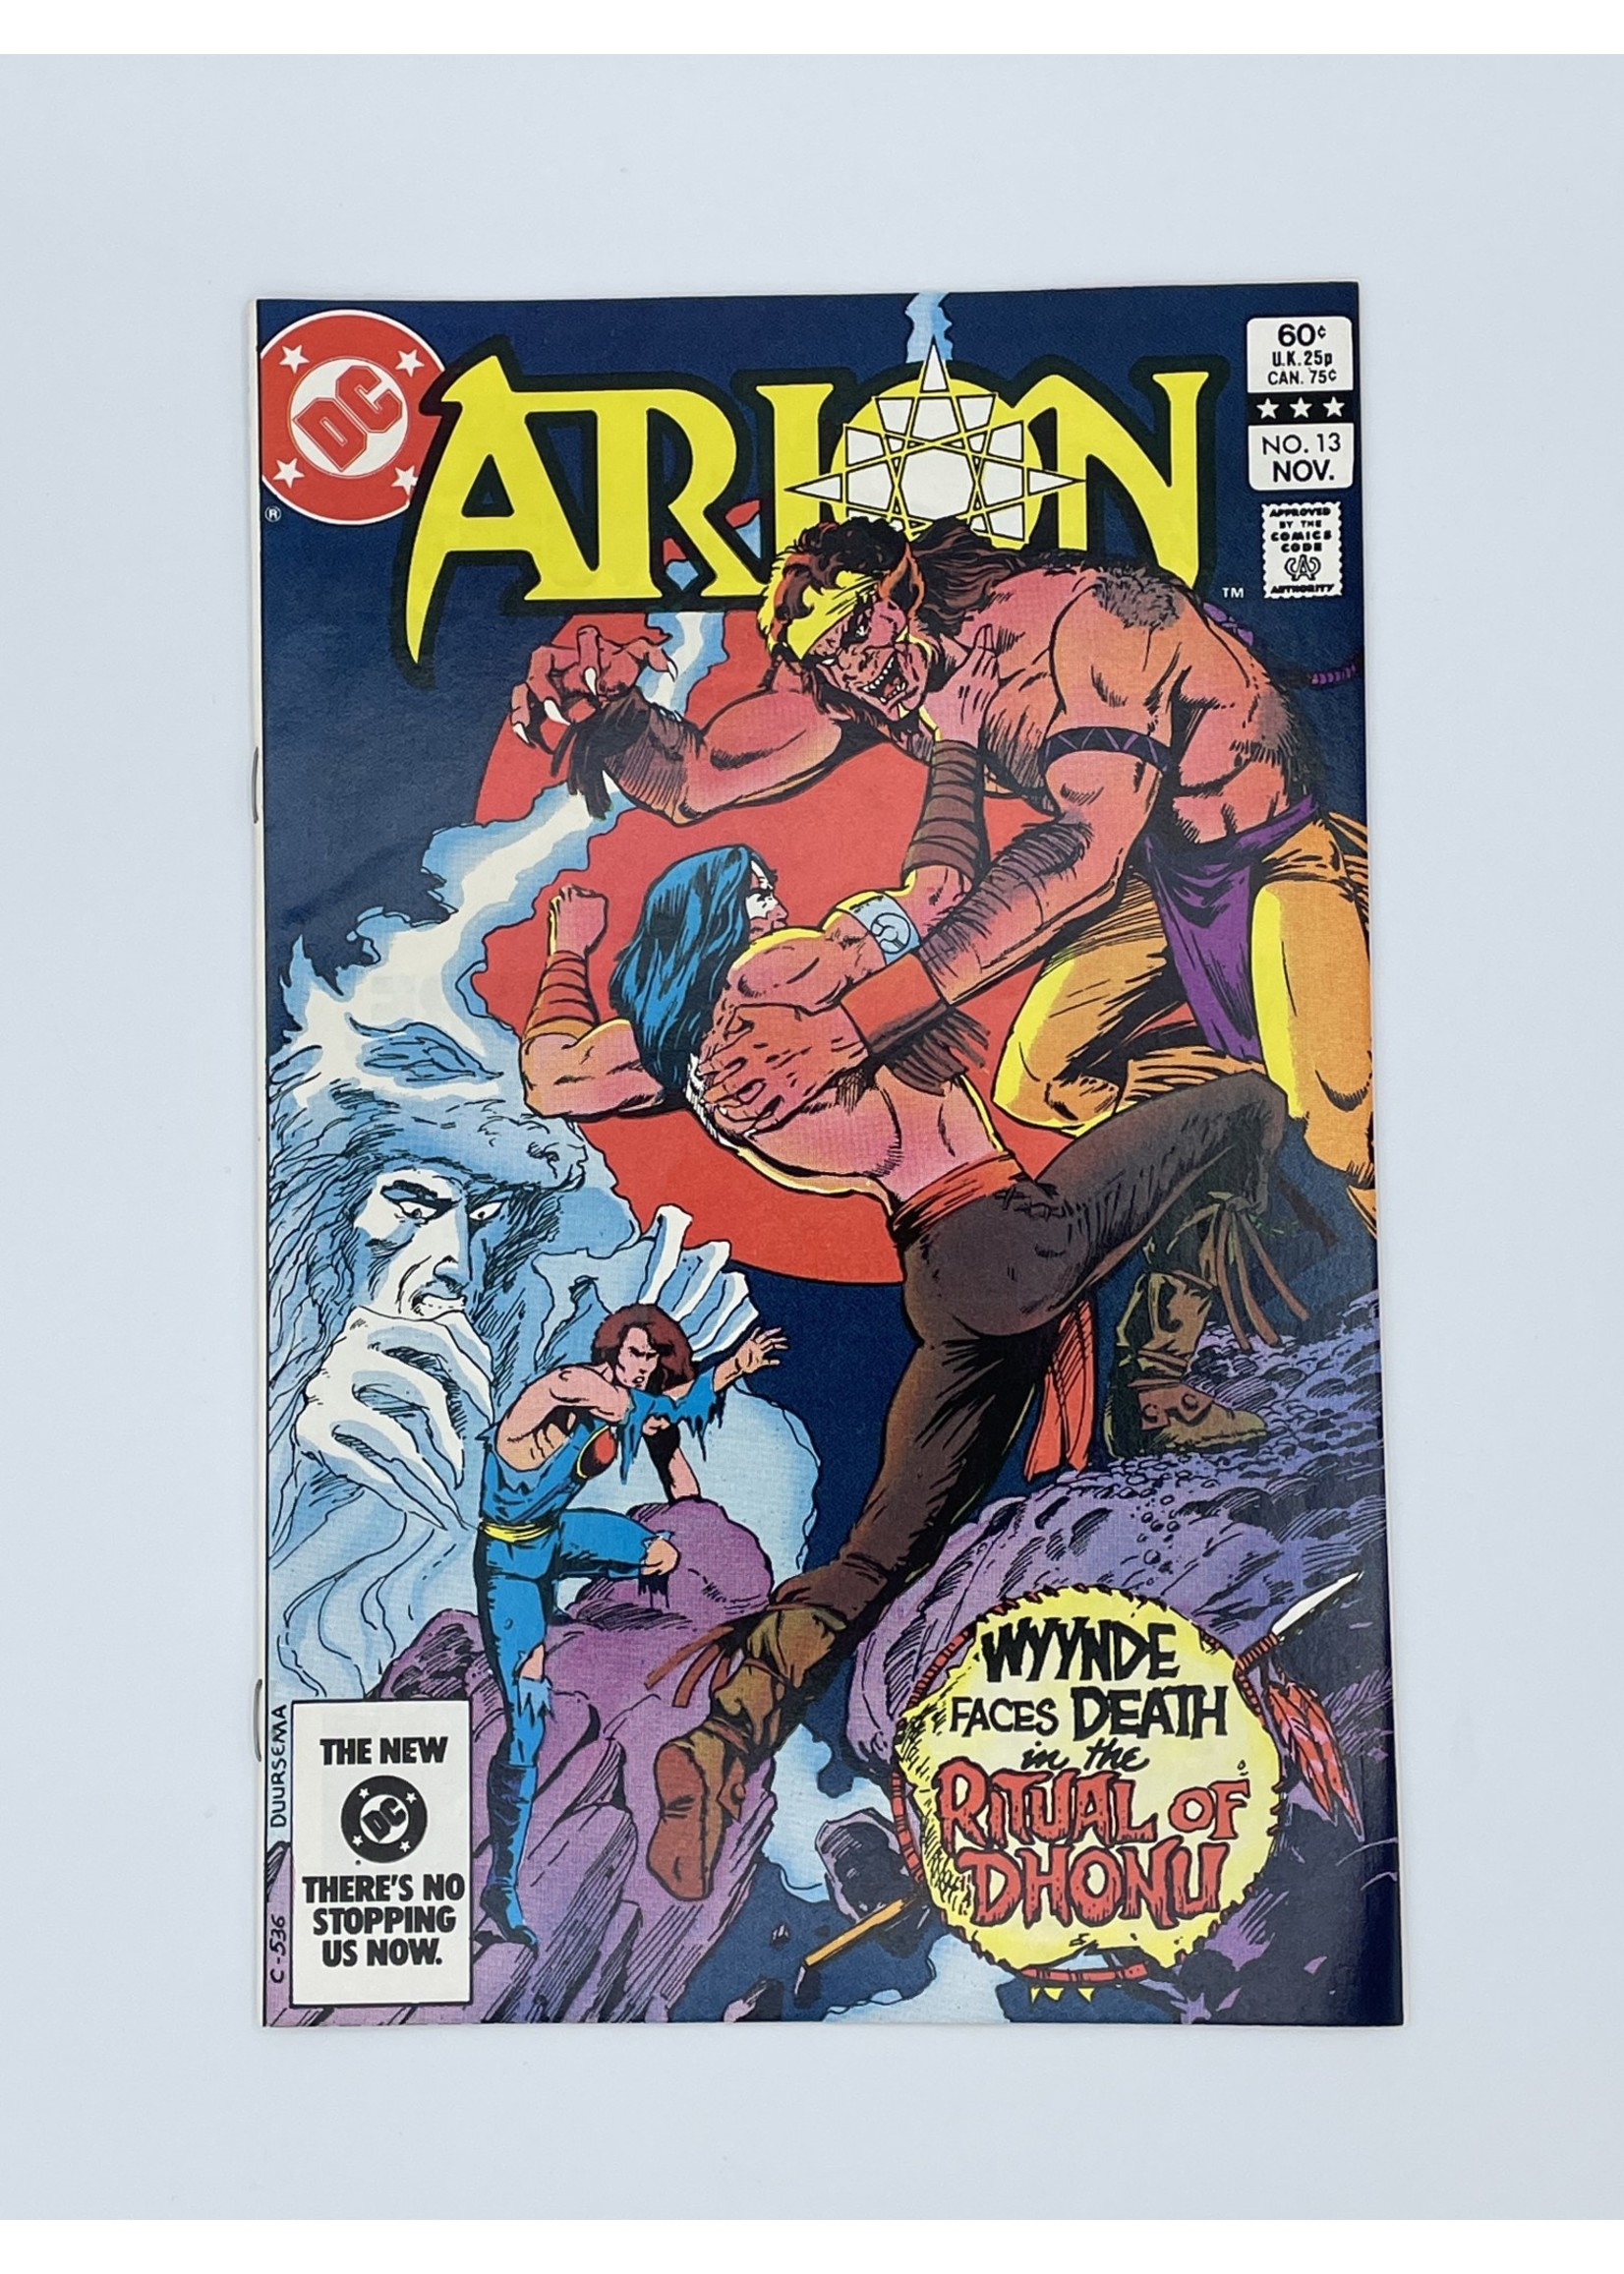 DC Arion, Lord Of Atlantis #13 Dc November 1983